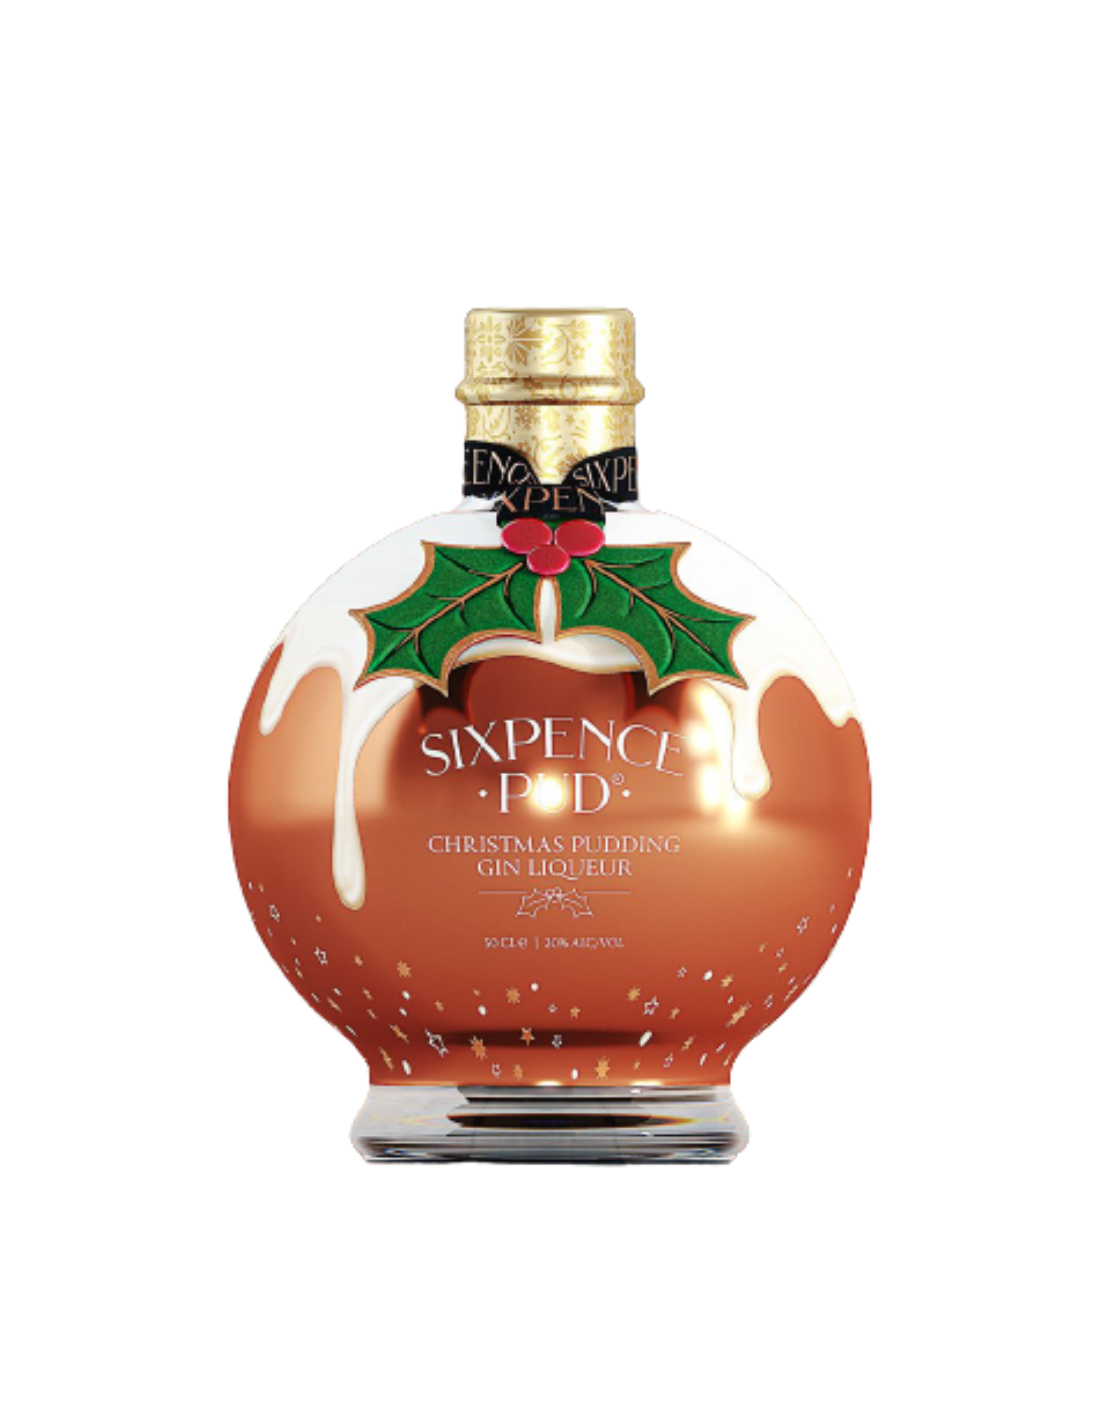 Lichior de gin Sixpence Pud Christmas Pudding + cutie, 20% alc., 0.5L, Marea Britanie alcooldiscount.ro